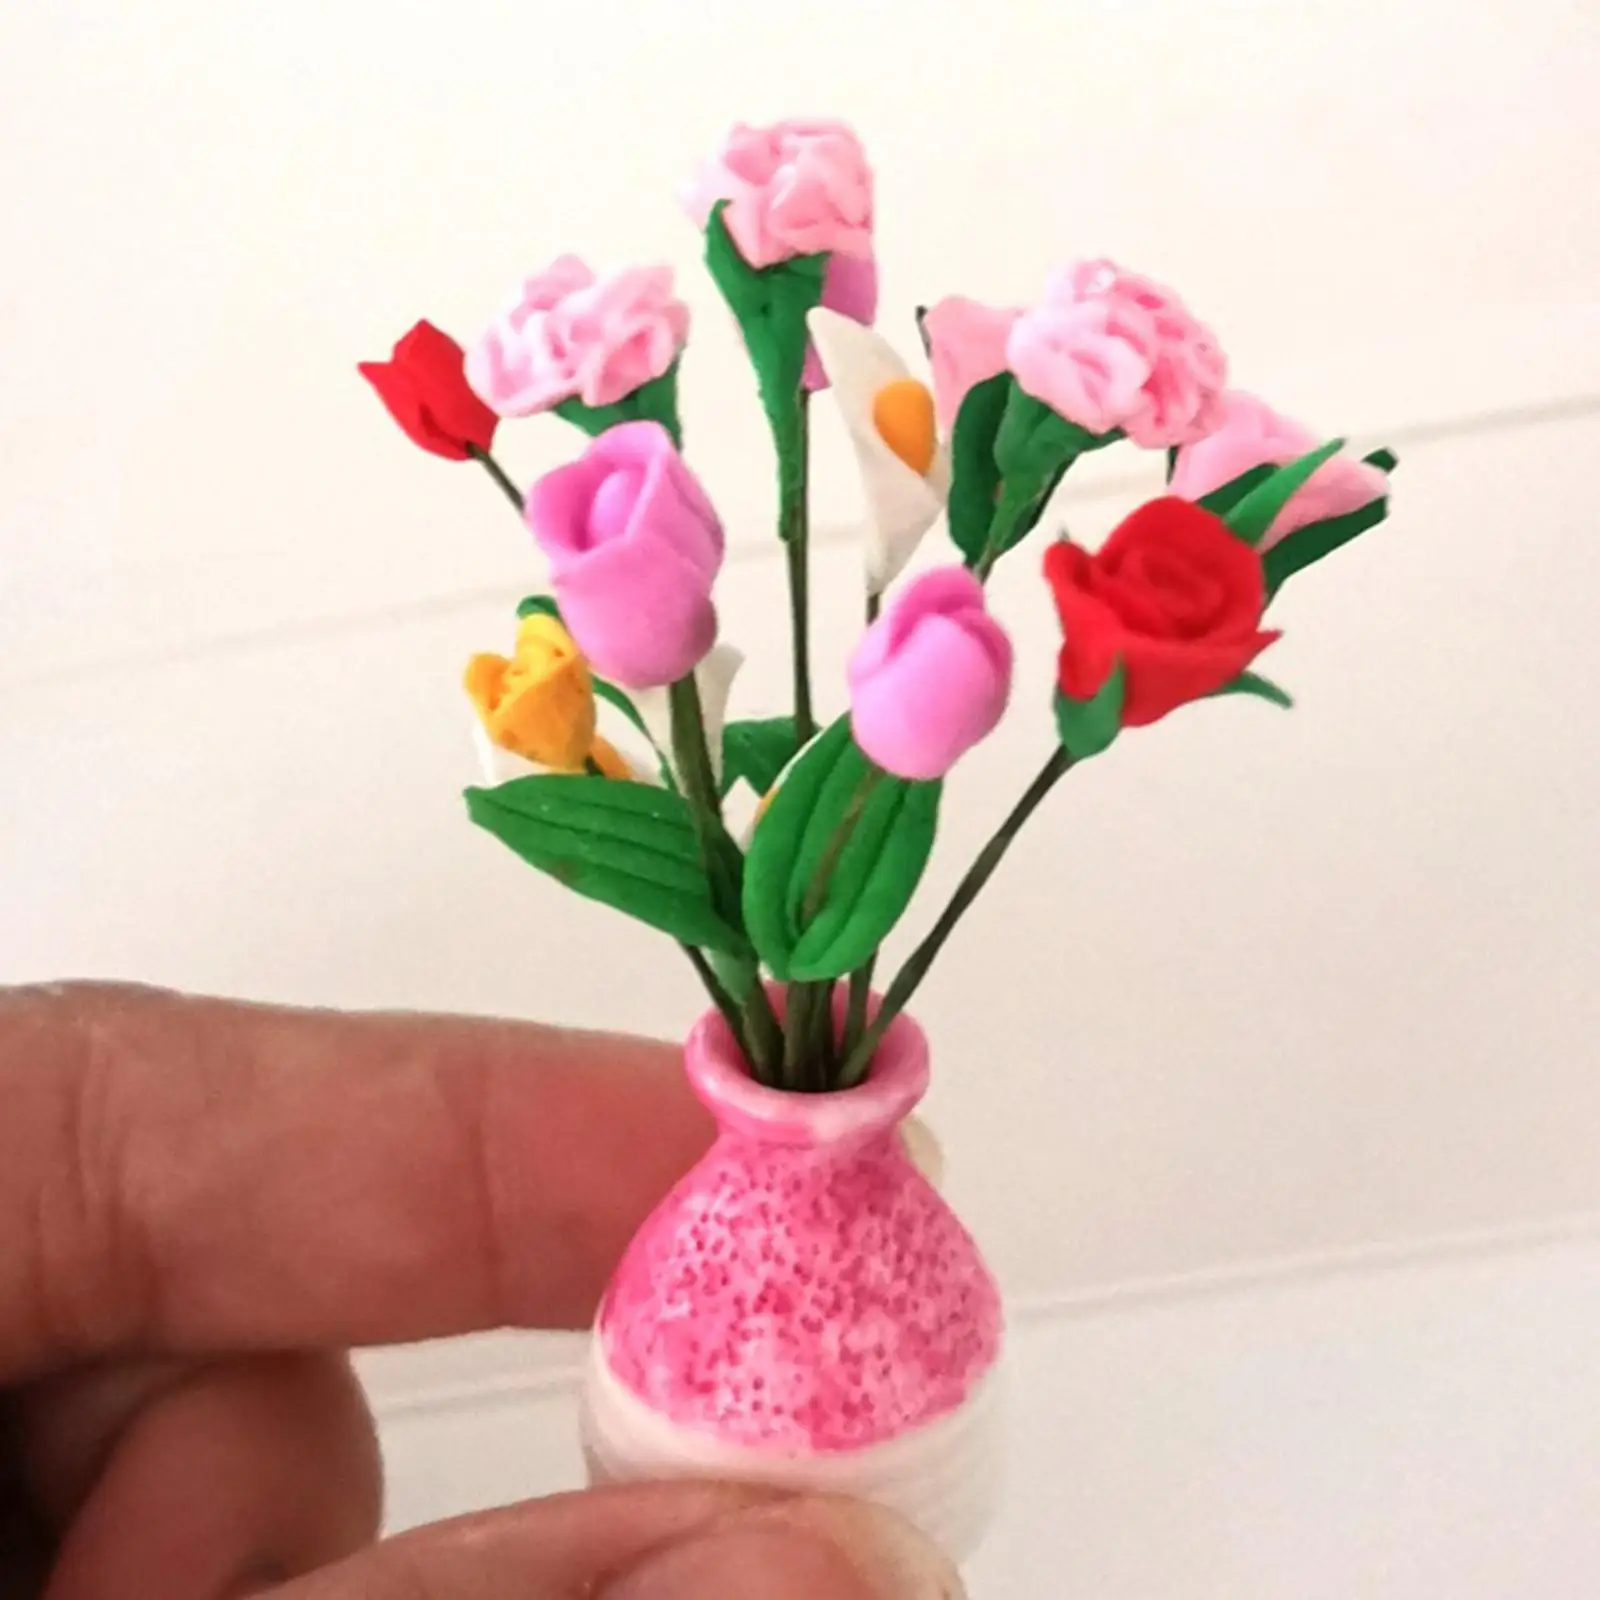 Miniature Flower Greenery Ornament Pretend Play Dollhouse Miniature Plant for Dollhouse Accessories Micro Landscape Ornaments